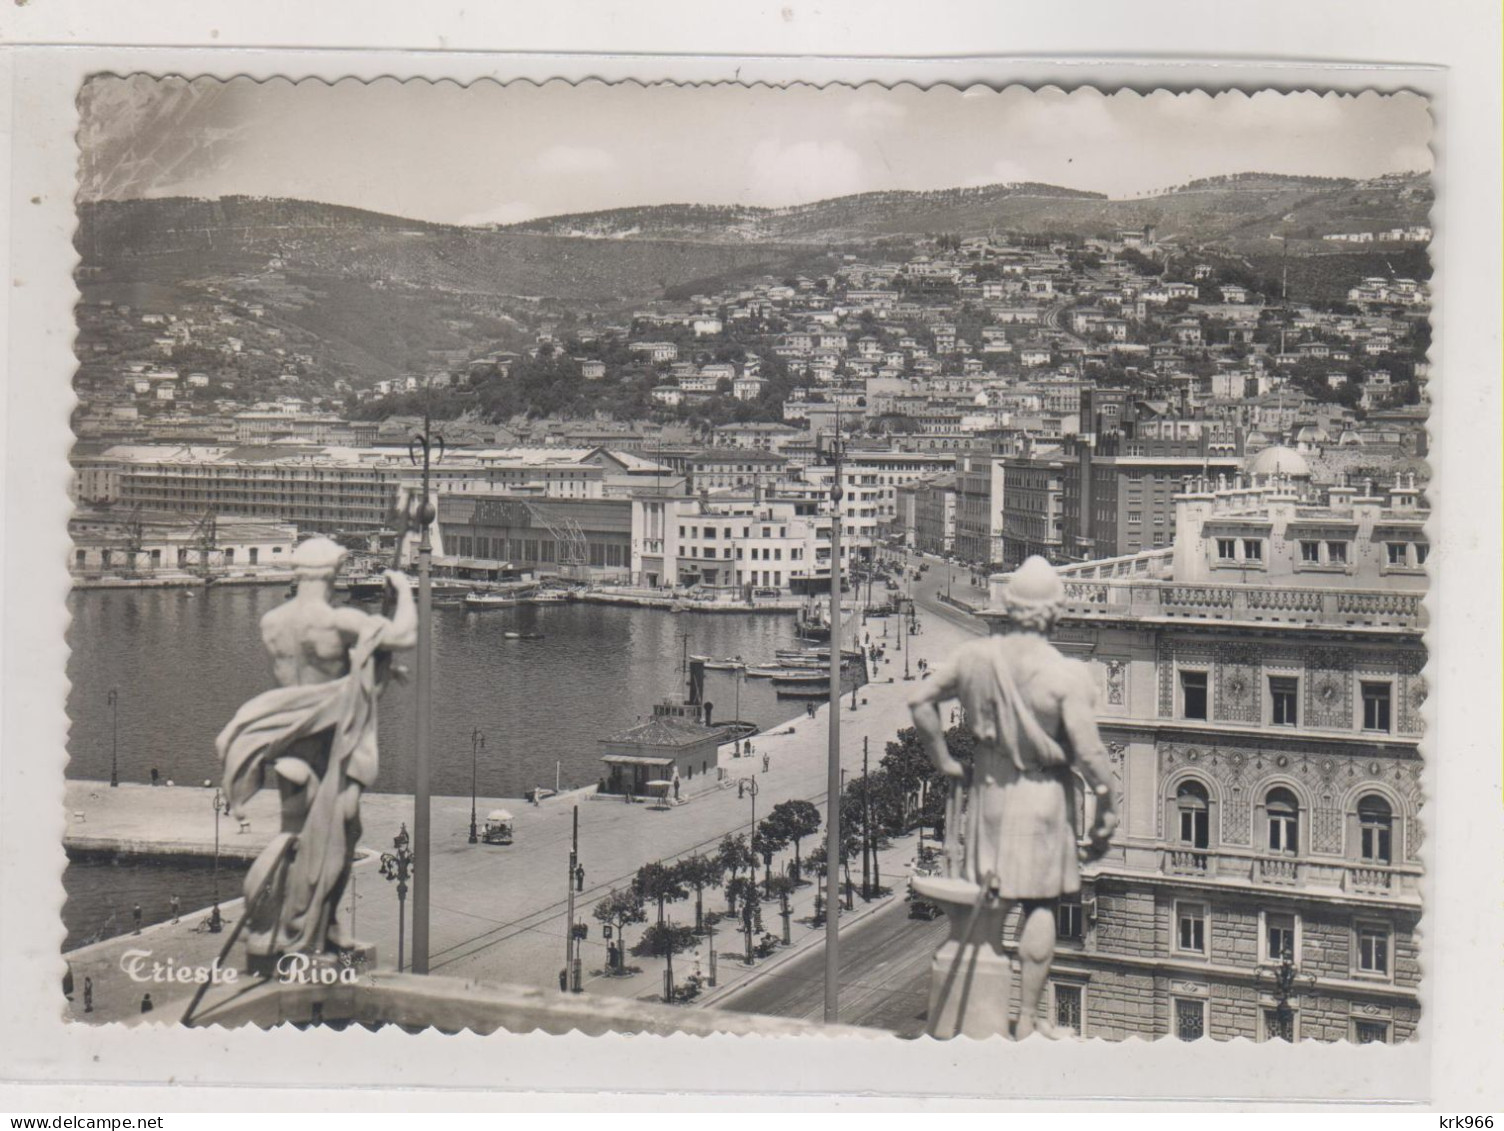 ITALY TRIESTE A 1953 AMG-FTT  Nice   Postcard To Yugoslavia - Poststempel